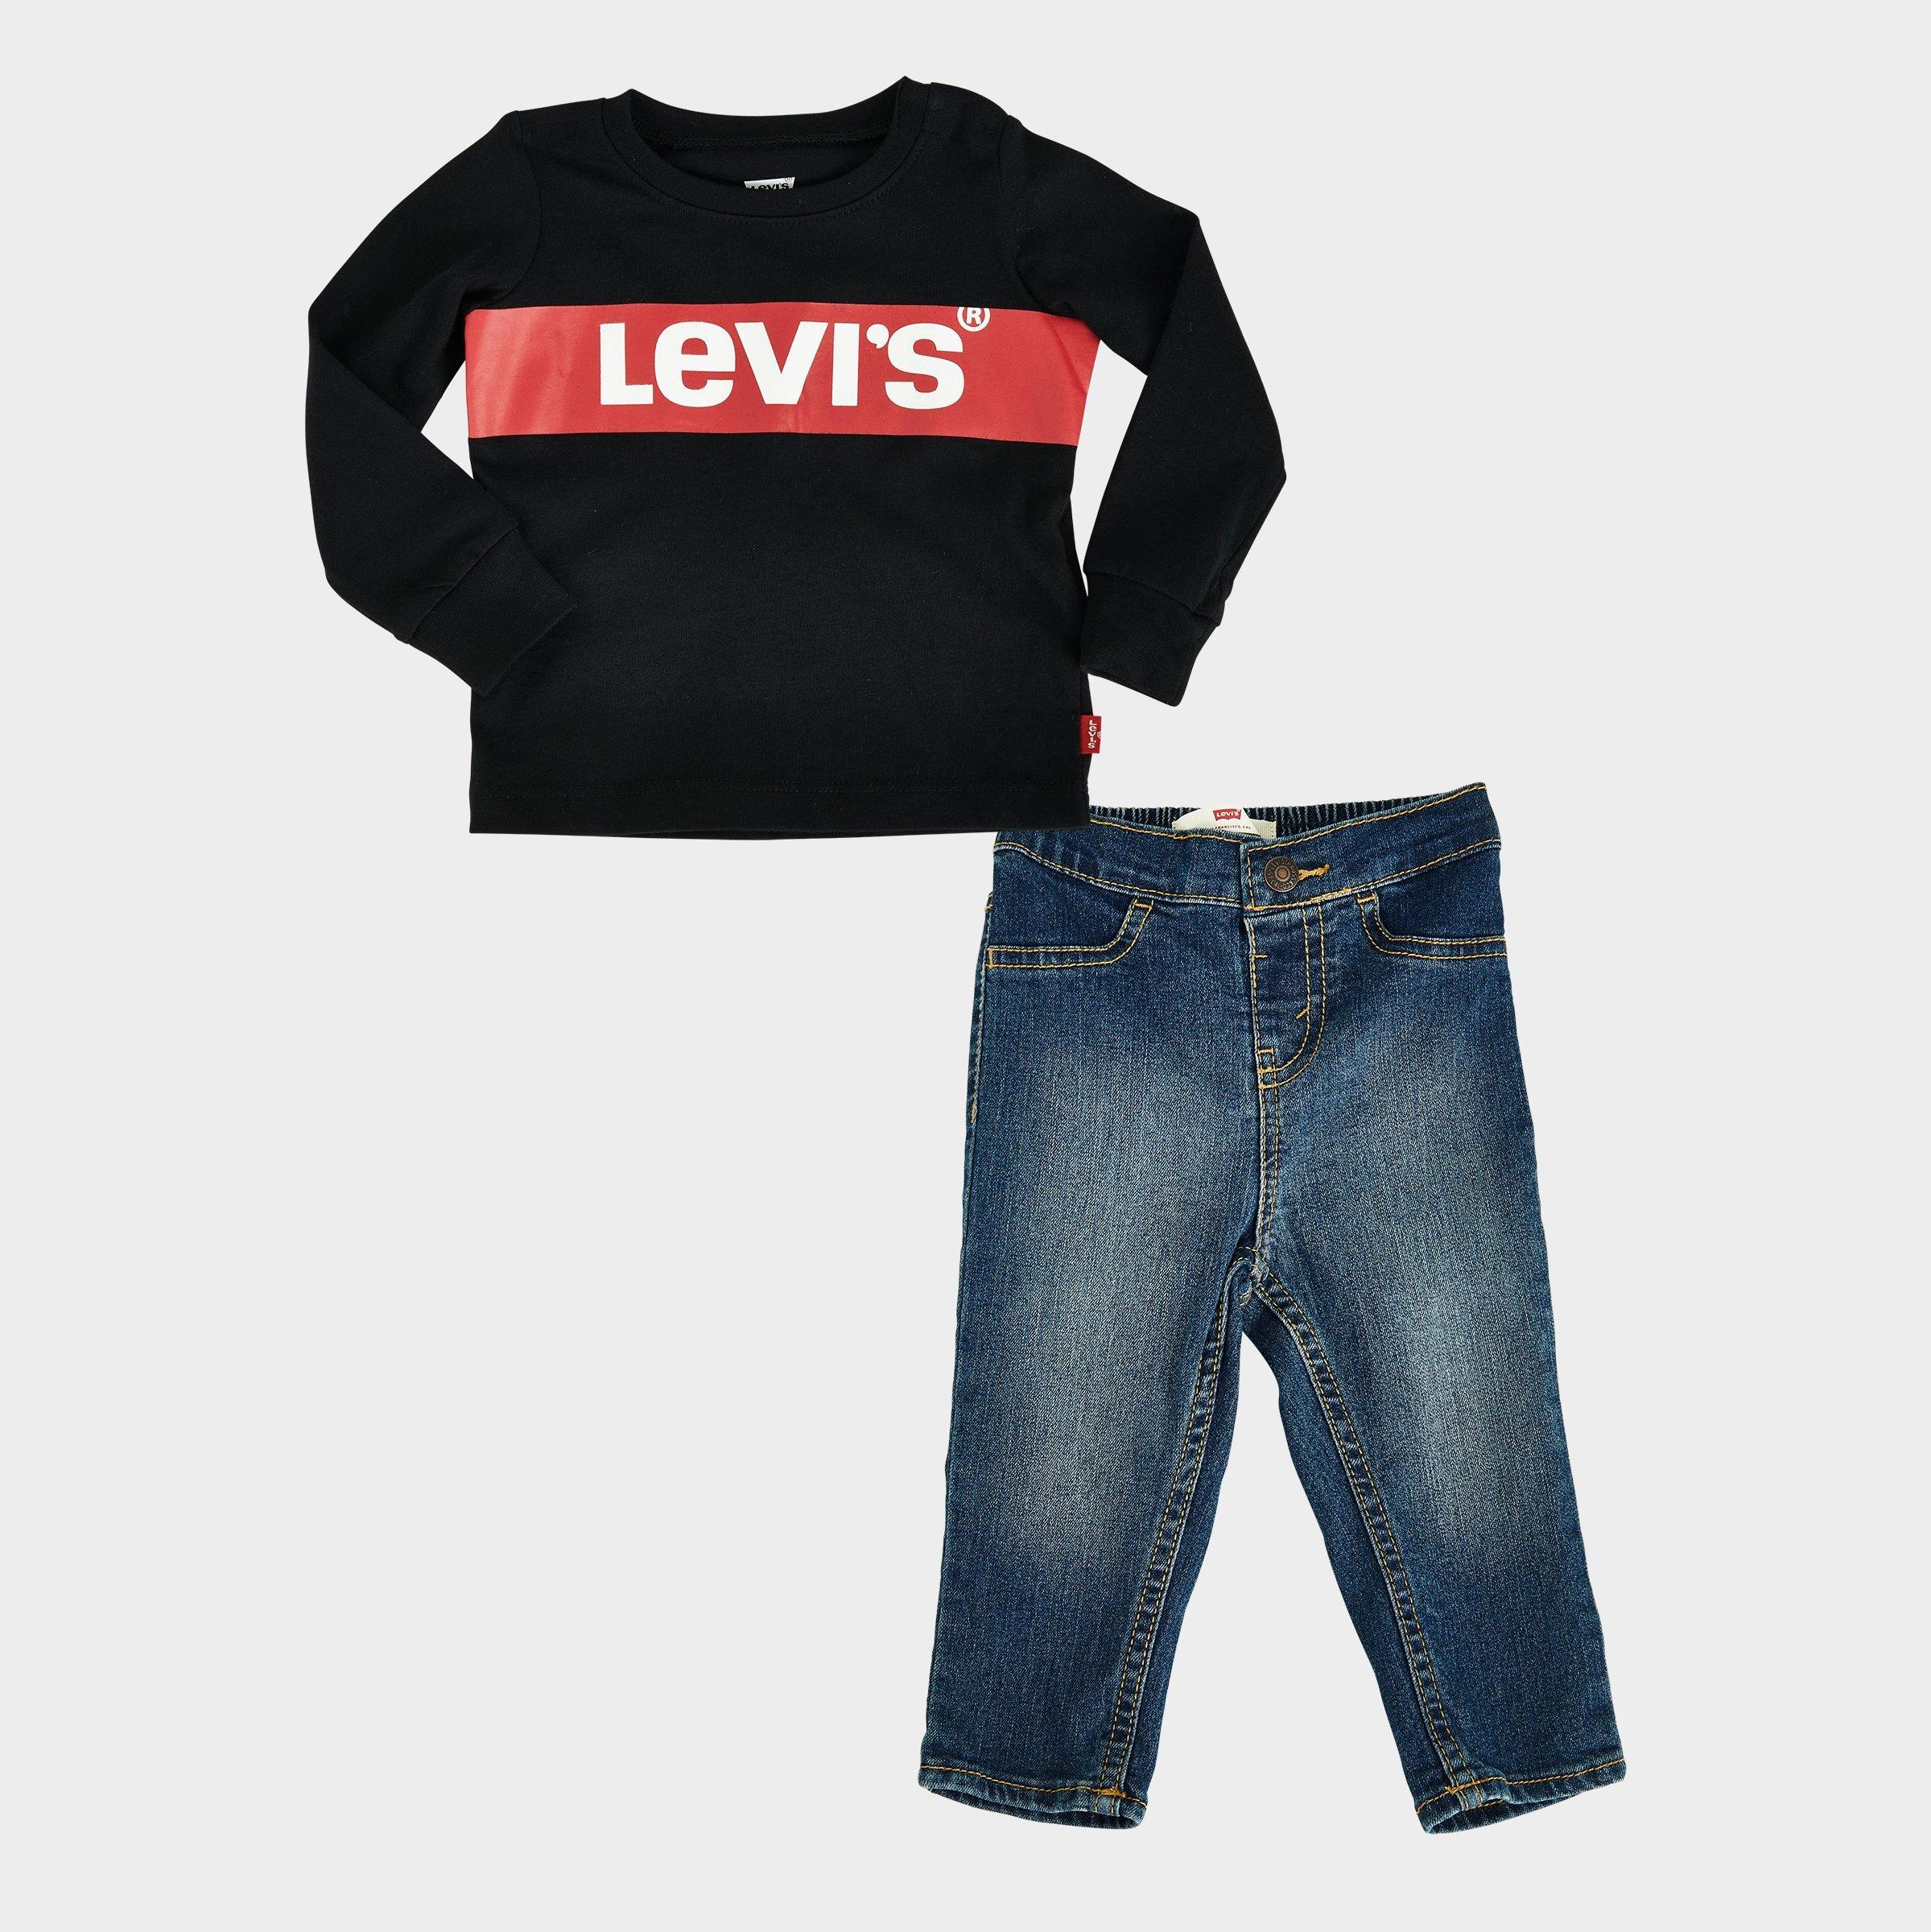 levis black long sleeve shirt